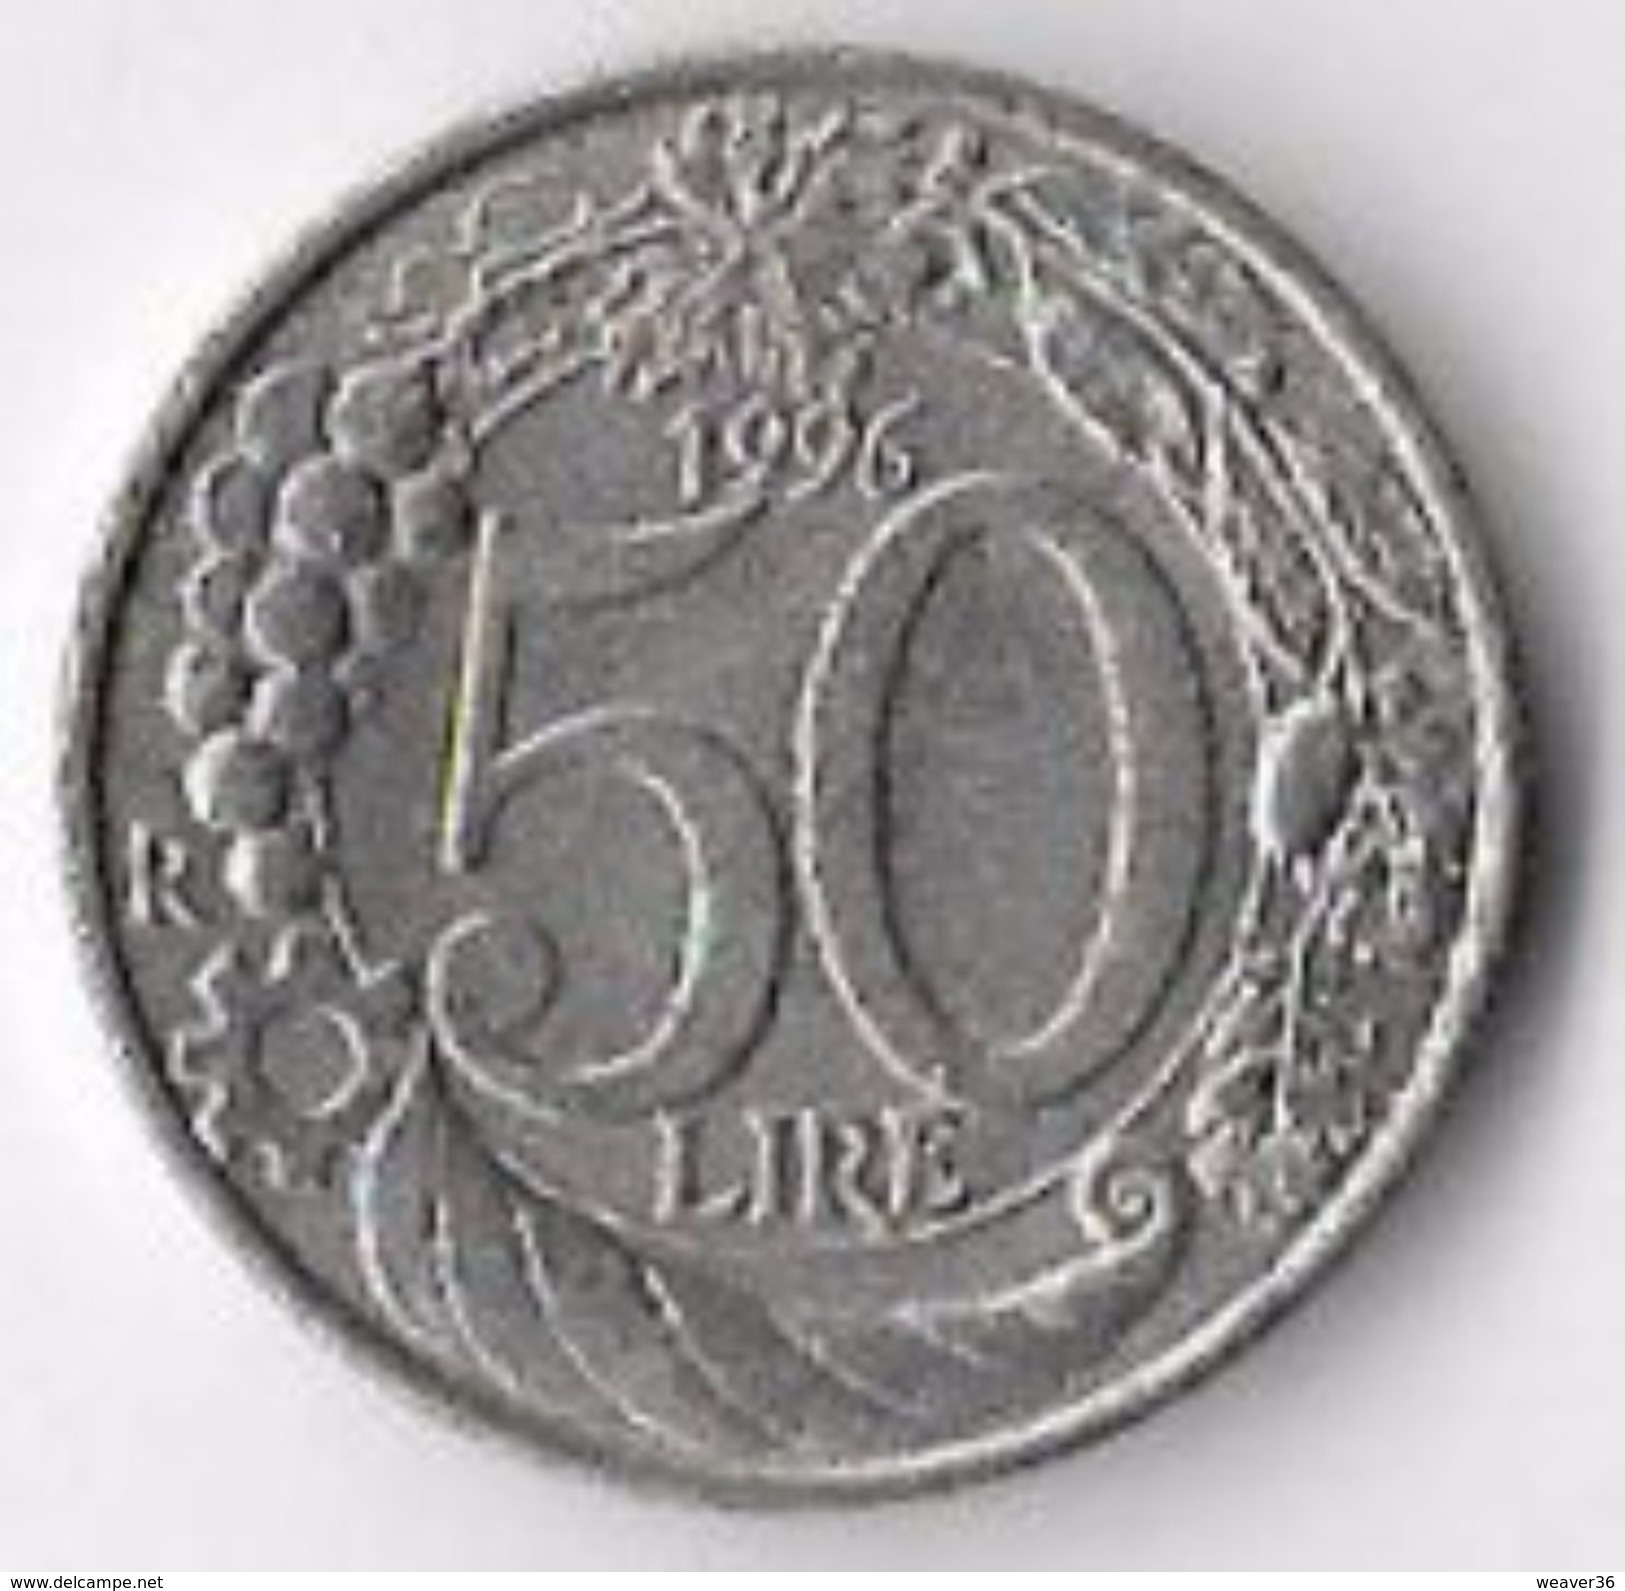 Italy 1996 50 Lire [C648/2D] - 50 Lire